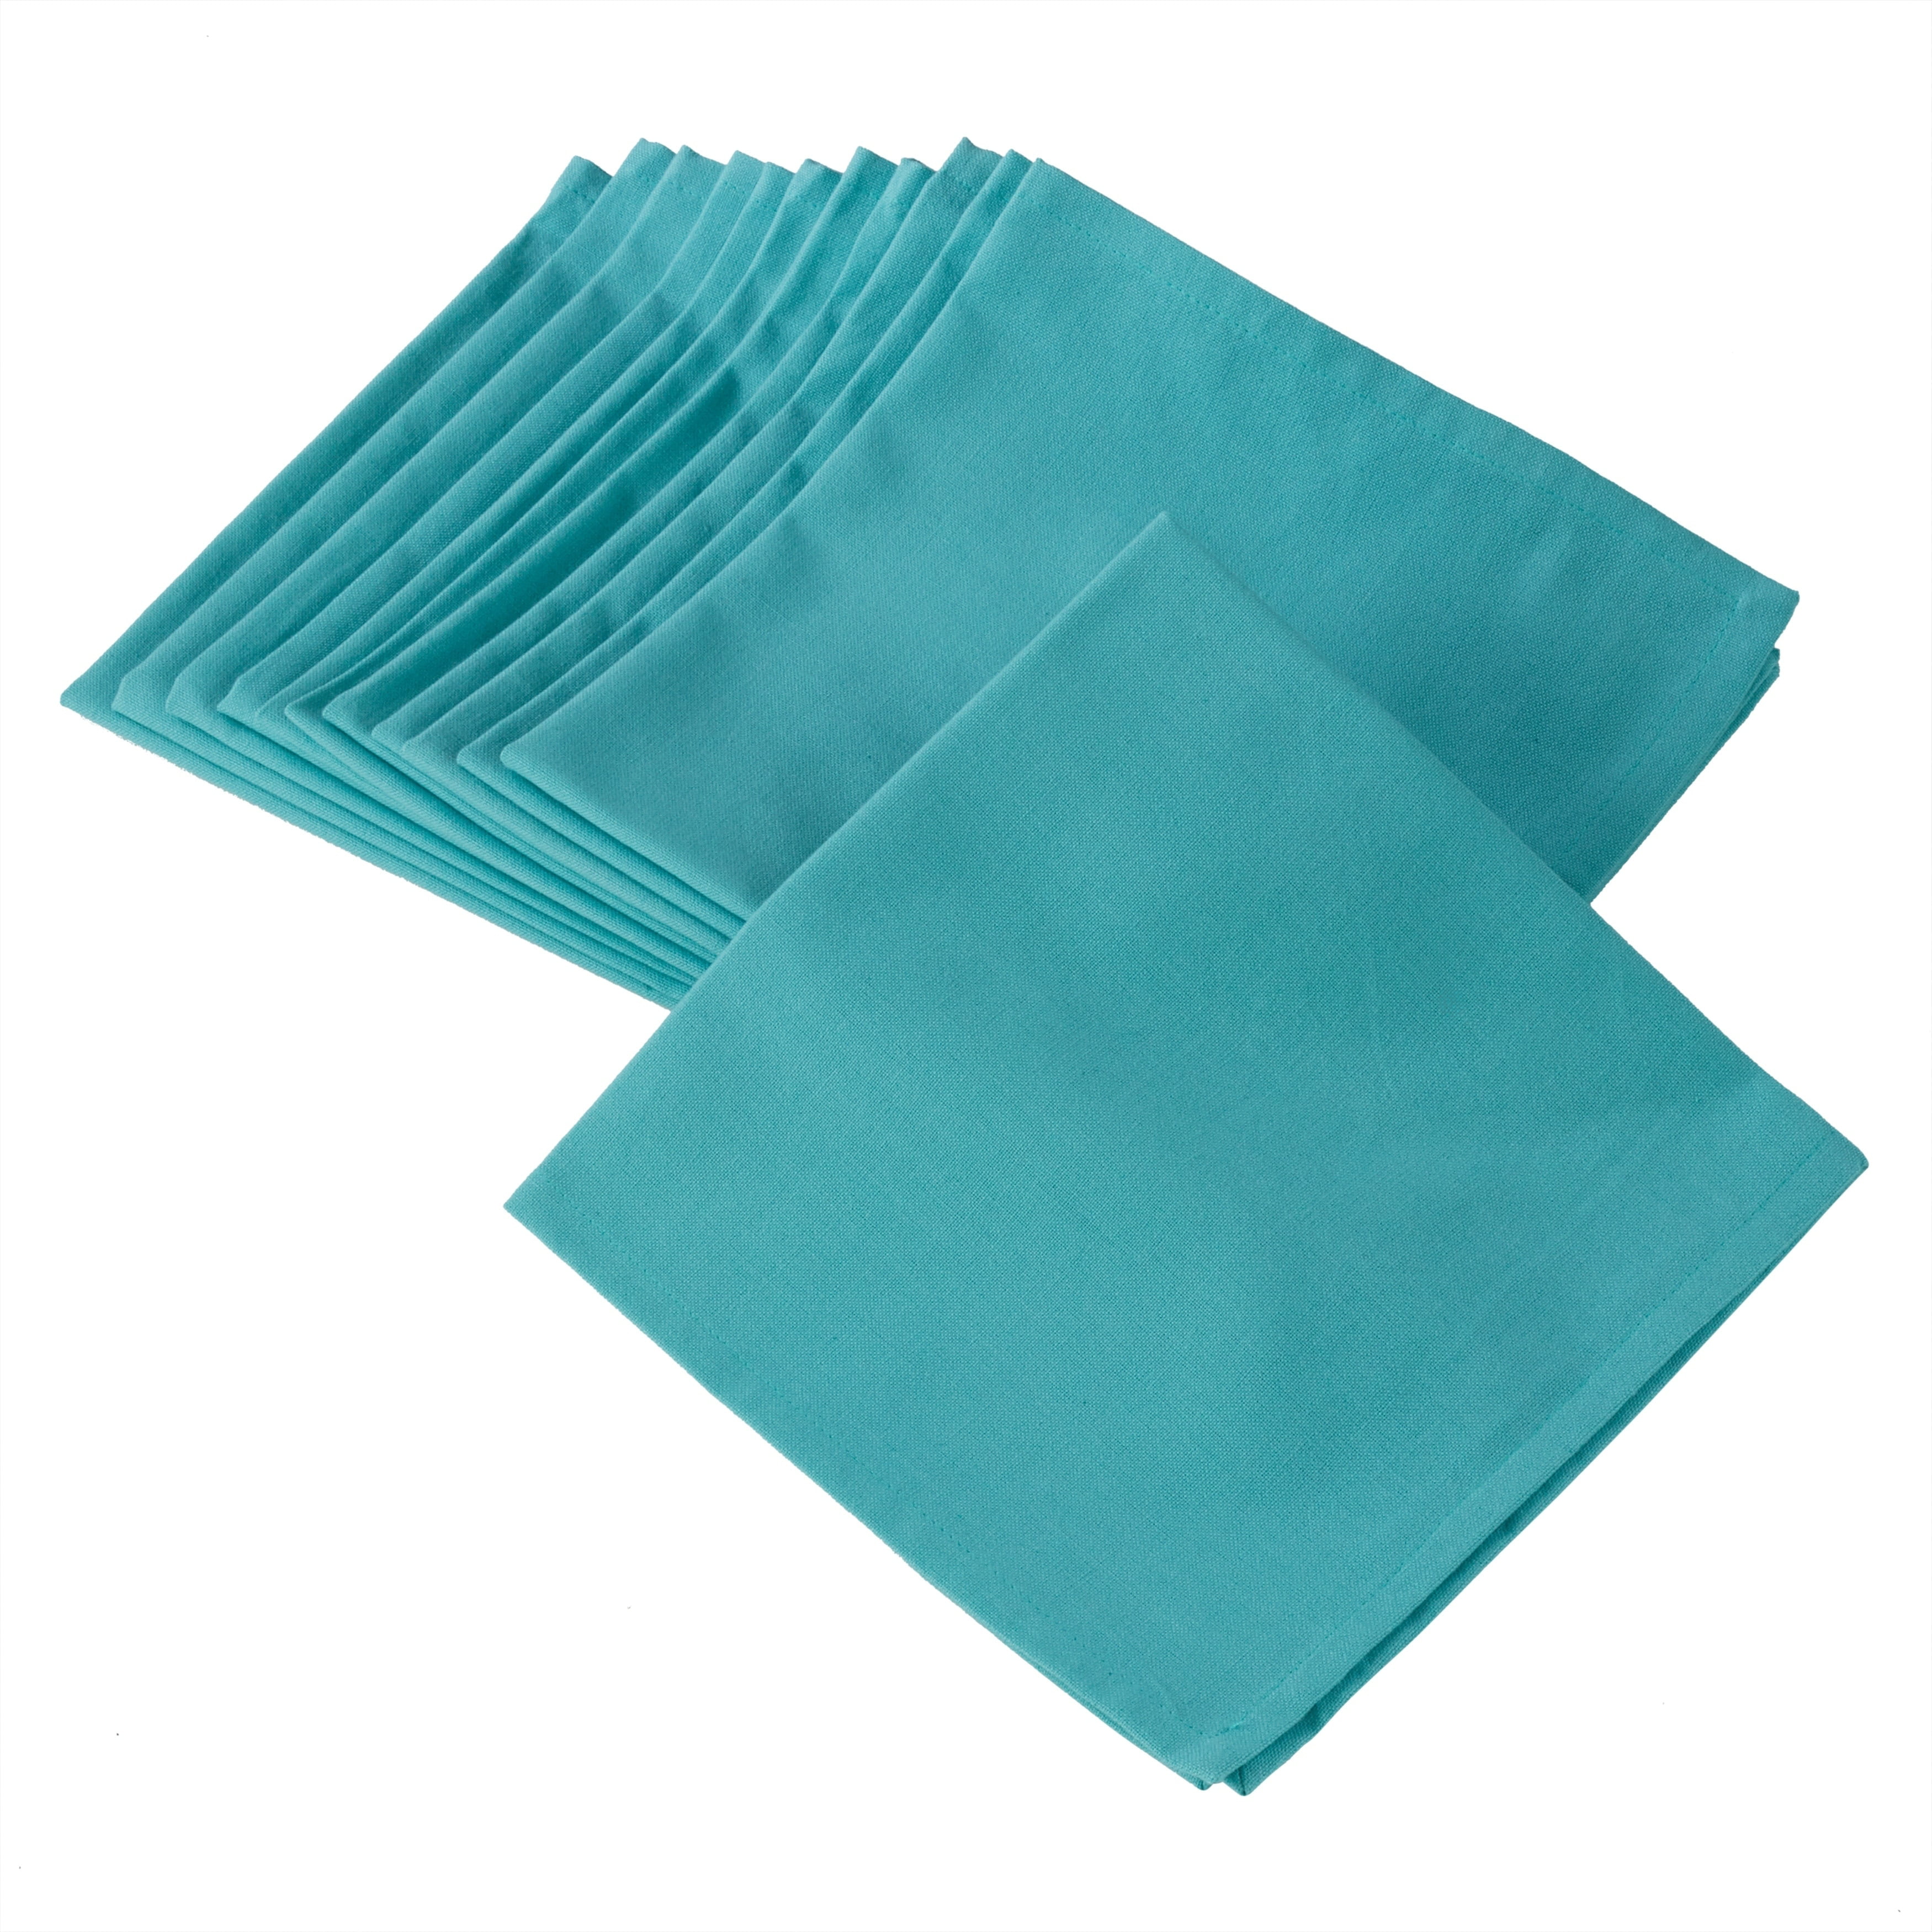 Flato Solid or Stripe 100% Cotton Cloth Linen 4 Dinner Table Napkin 20x20 inches 